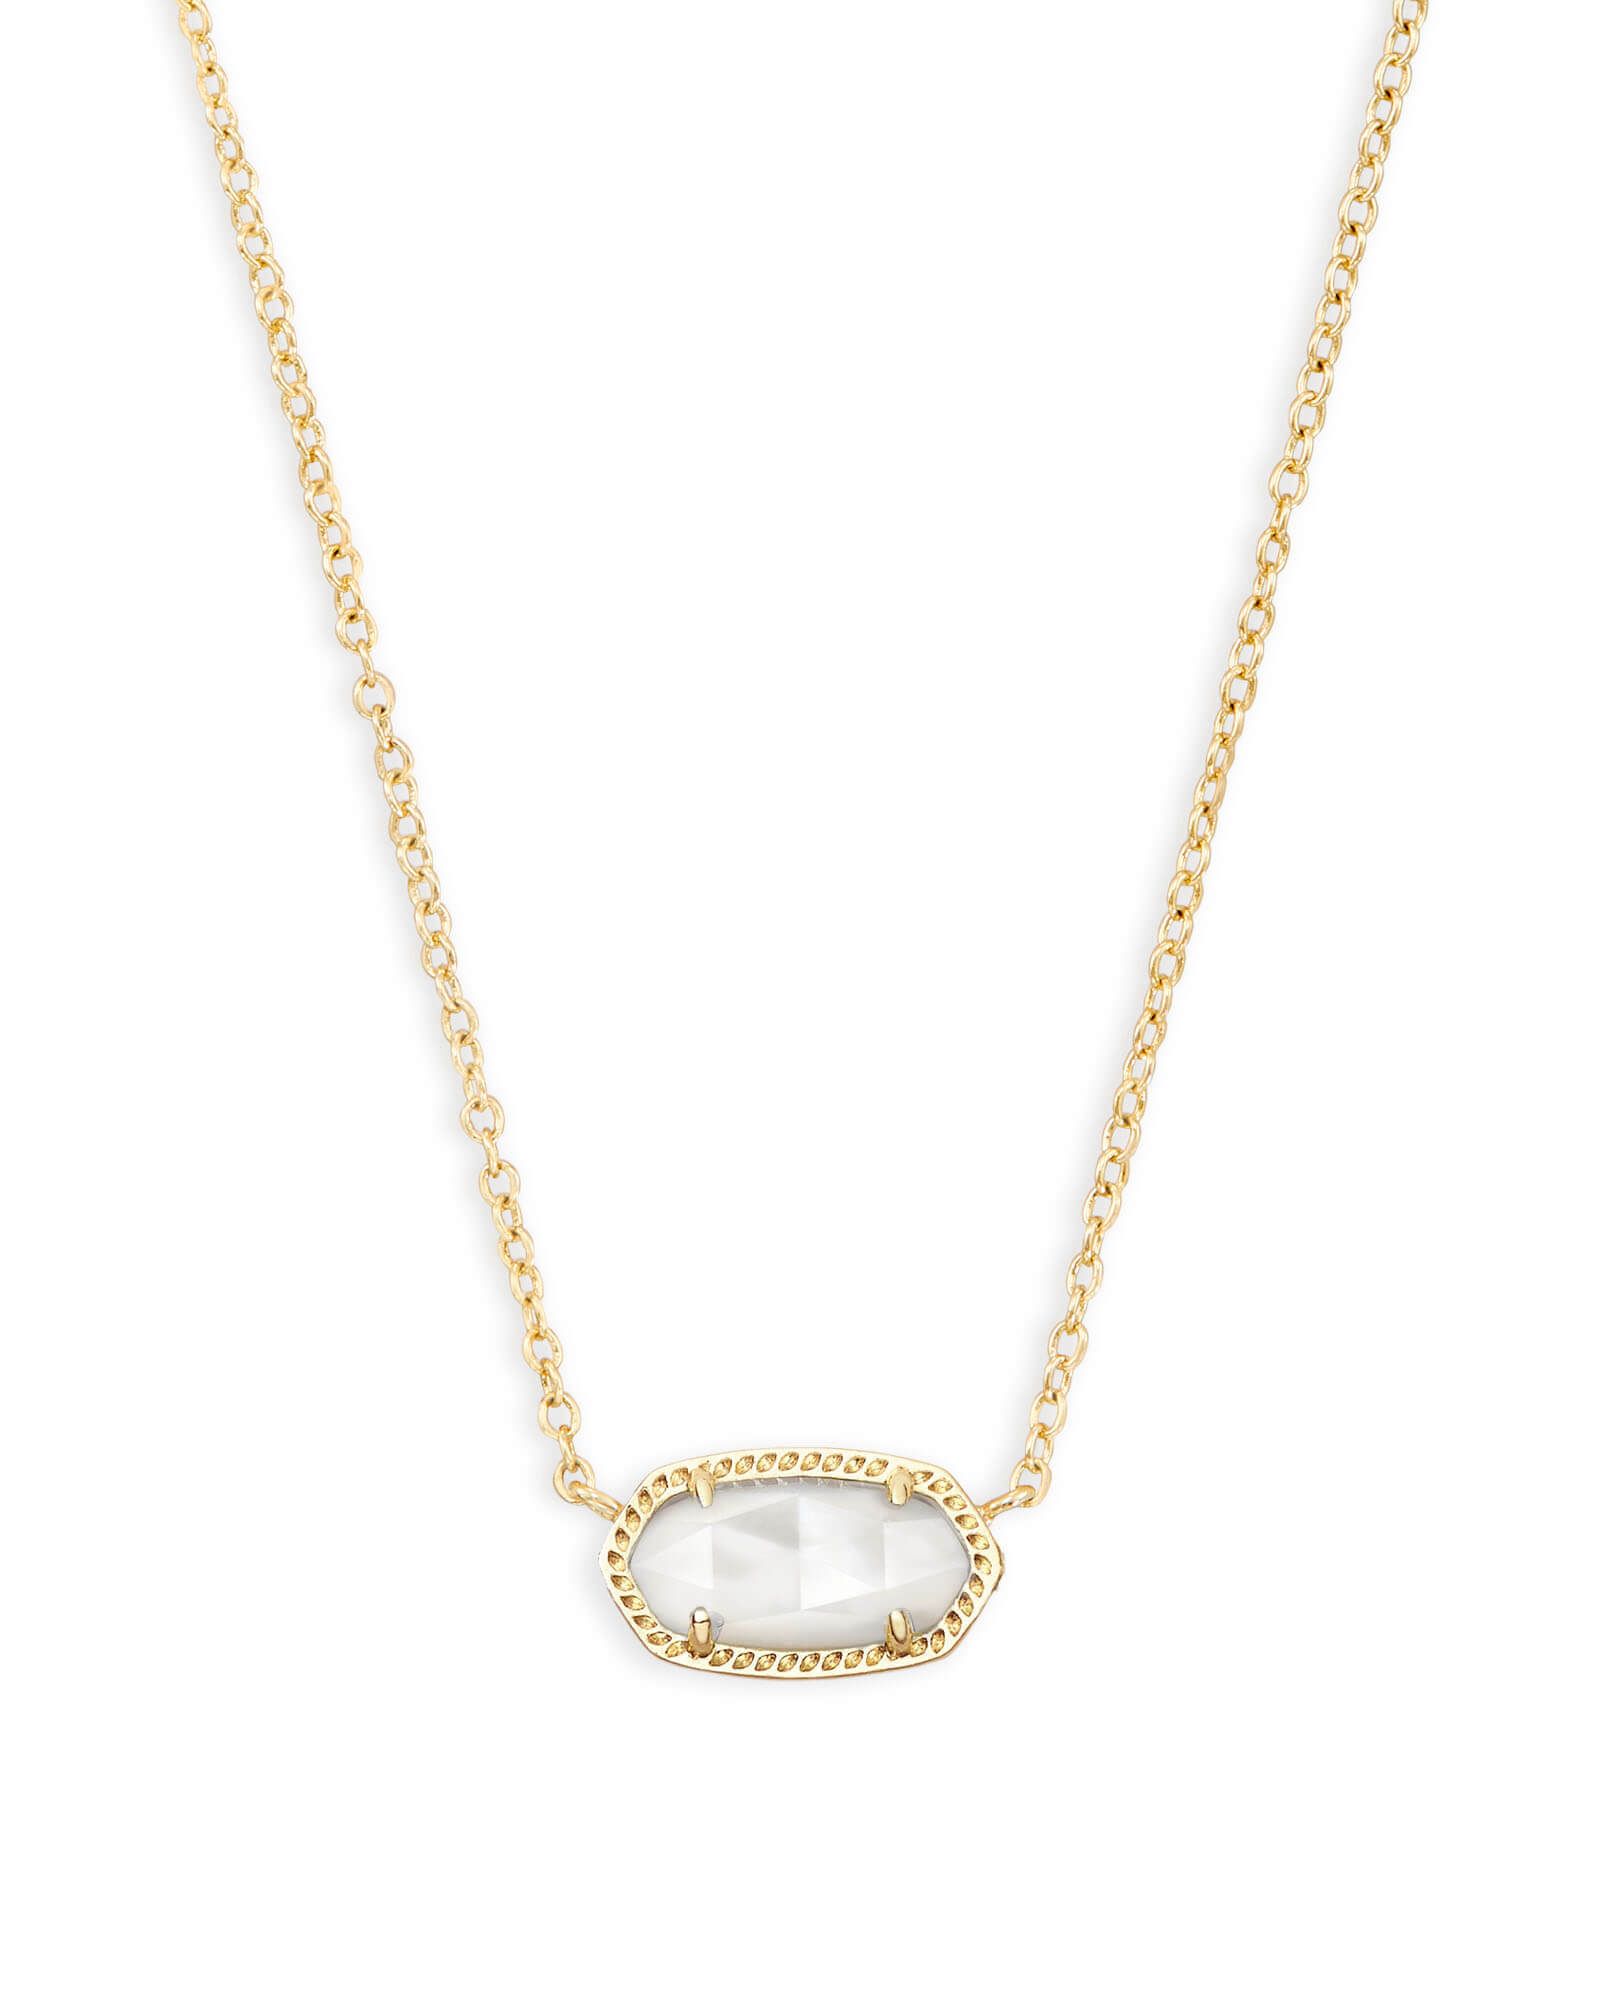 Elisa Gold Pendant Necklace Abalone Shell | Kendra Scott | Kendra Scott